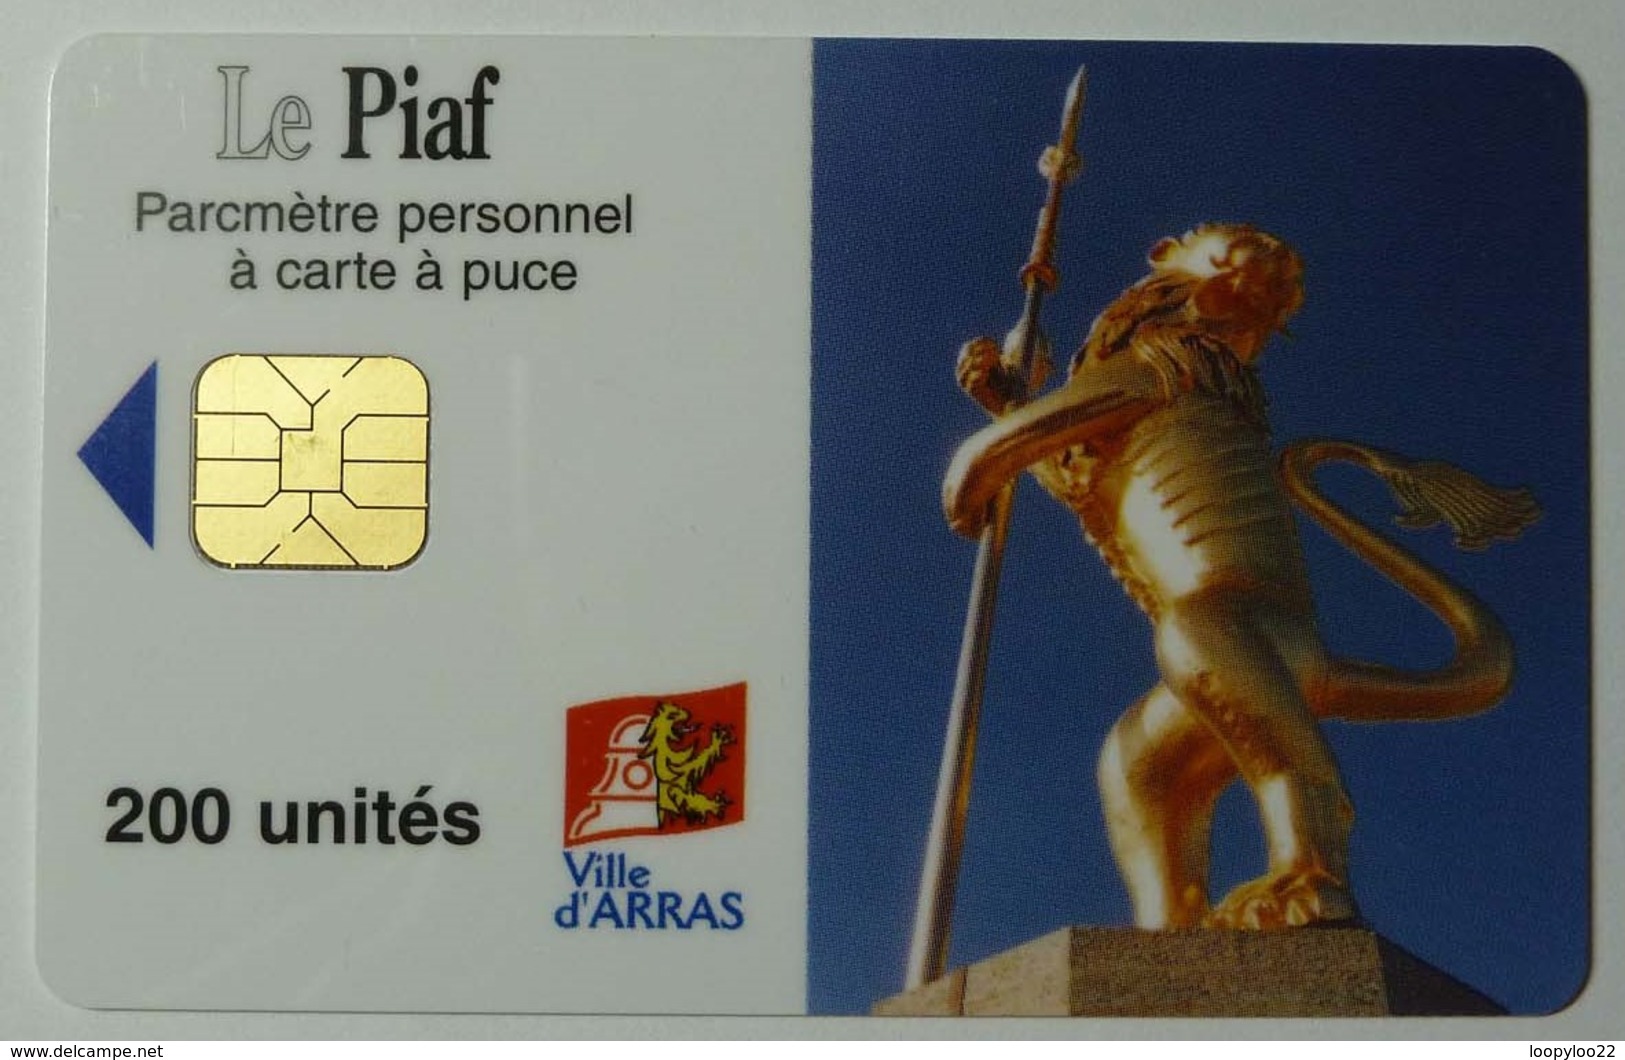 FRANCE - Le Piaf - Arras - 200 Units - 09/00 - 1000ex - 62000-1 - Mint - PIAF Parking Cards